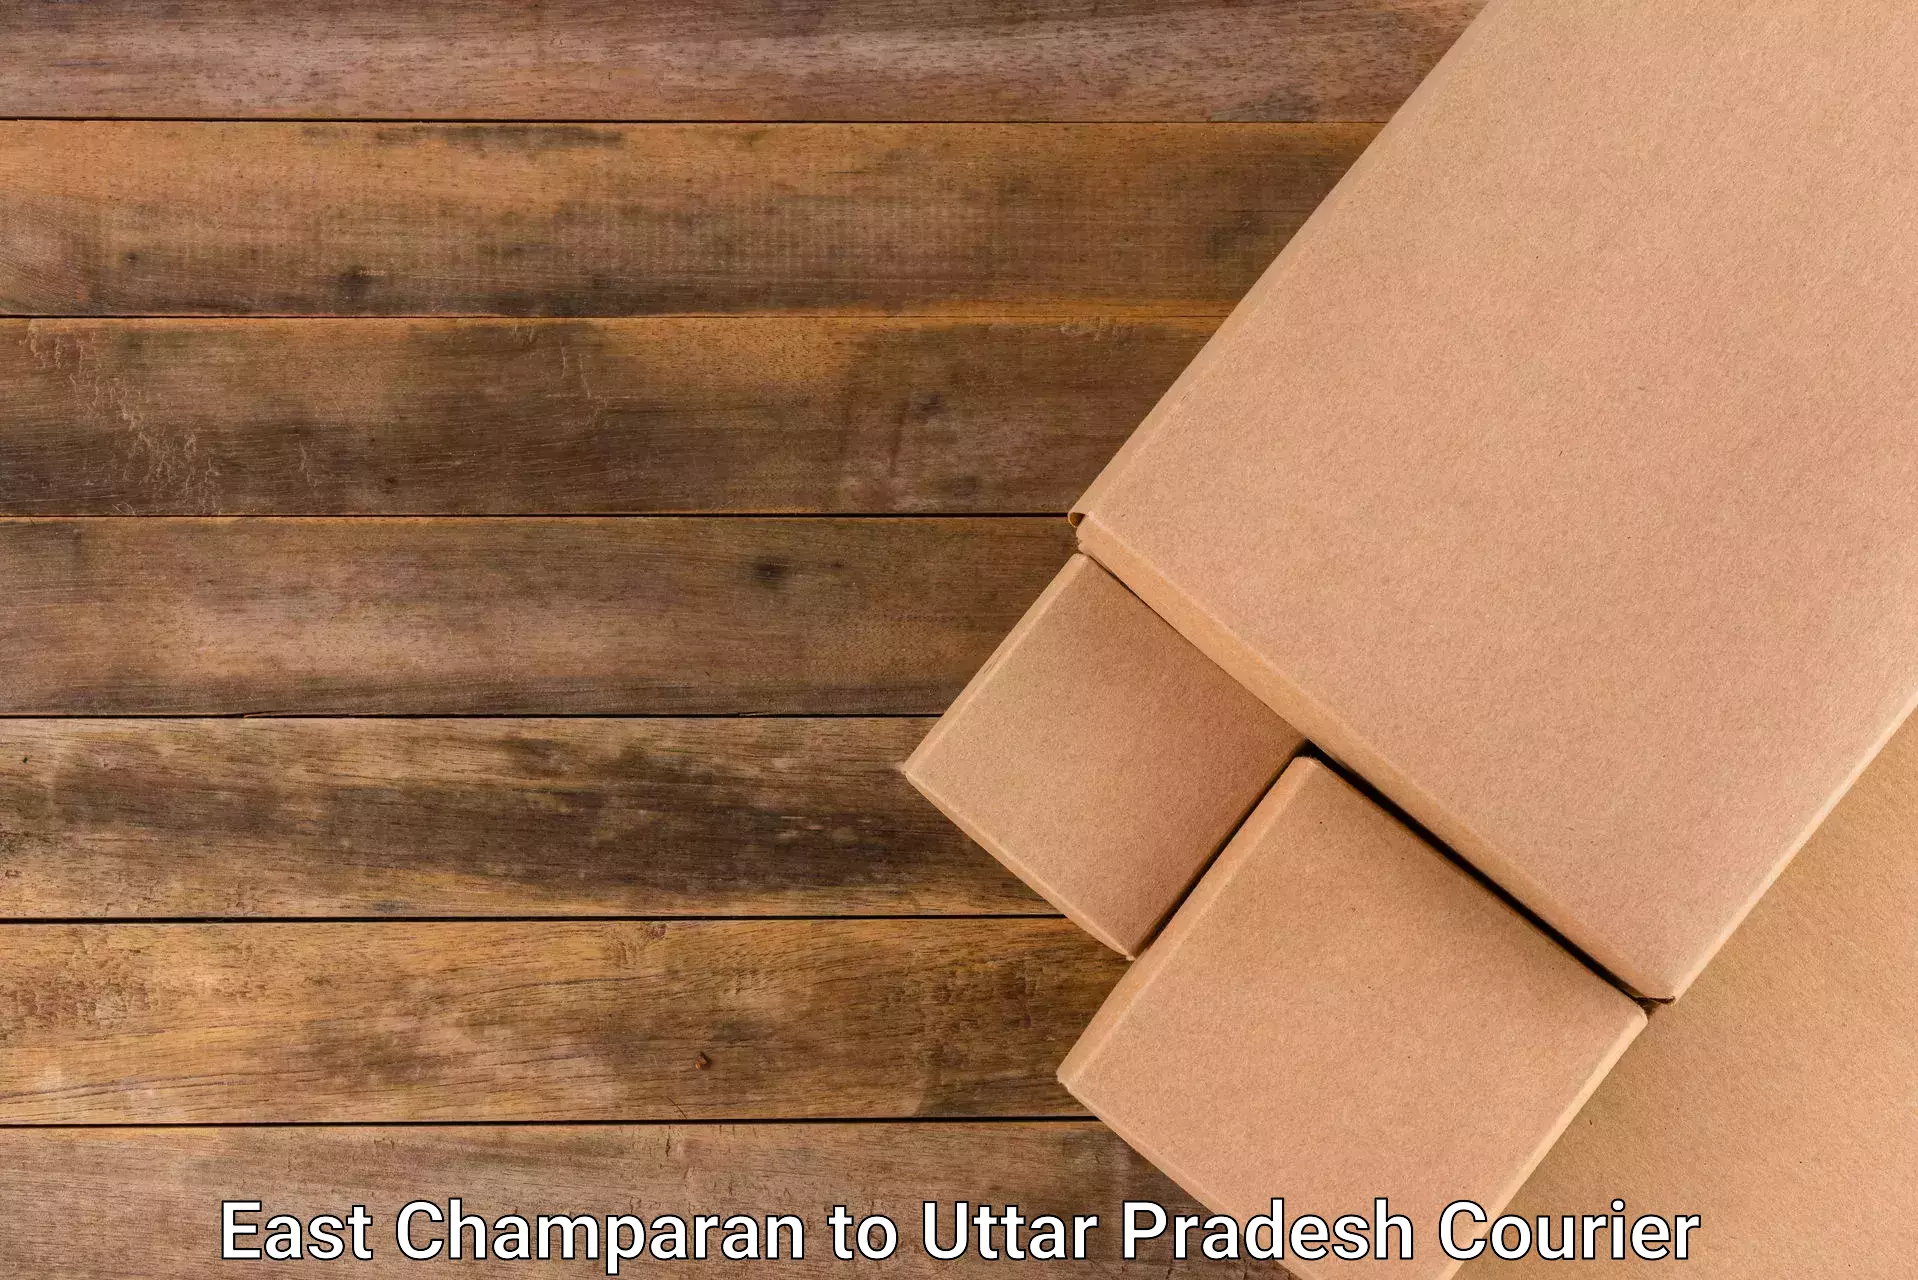 24-hour courier services East Champaran to Jyotiba Phule Nagar